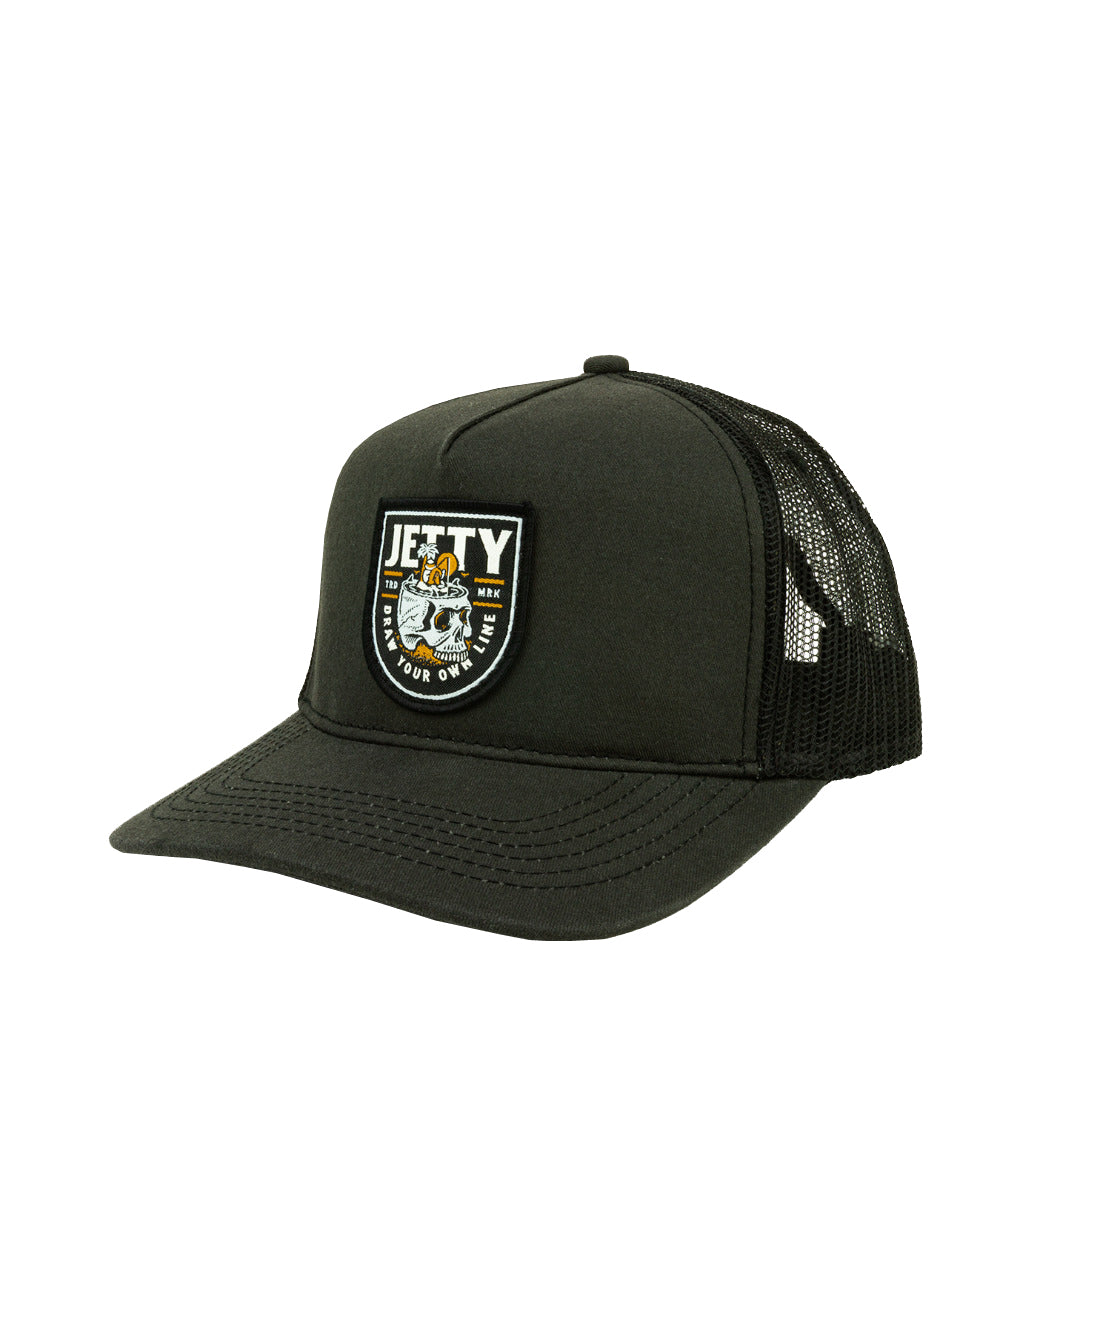 Jetty Stranded Trucker Hat Black OS